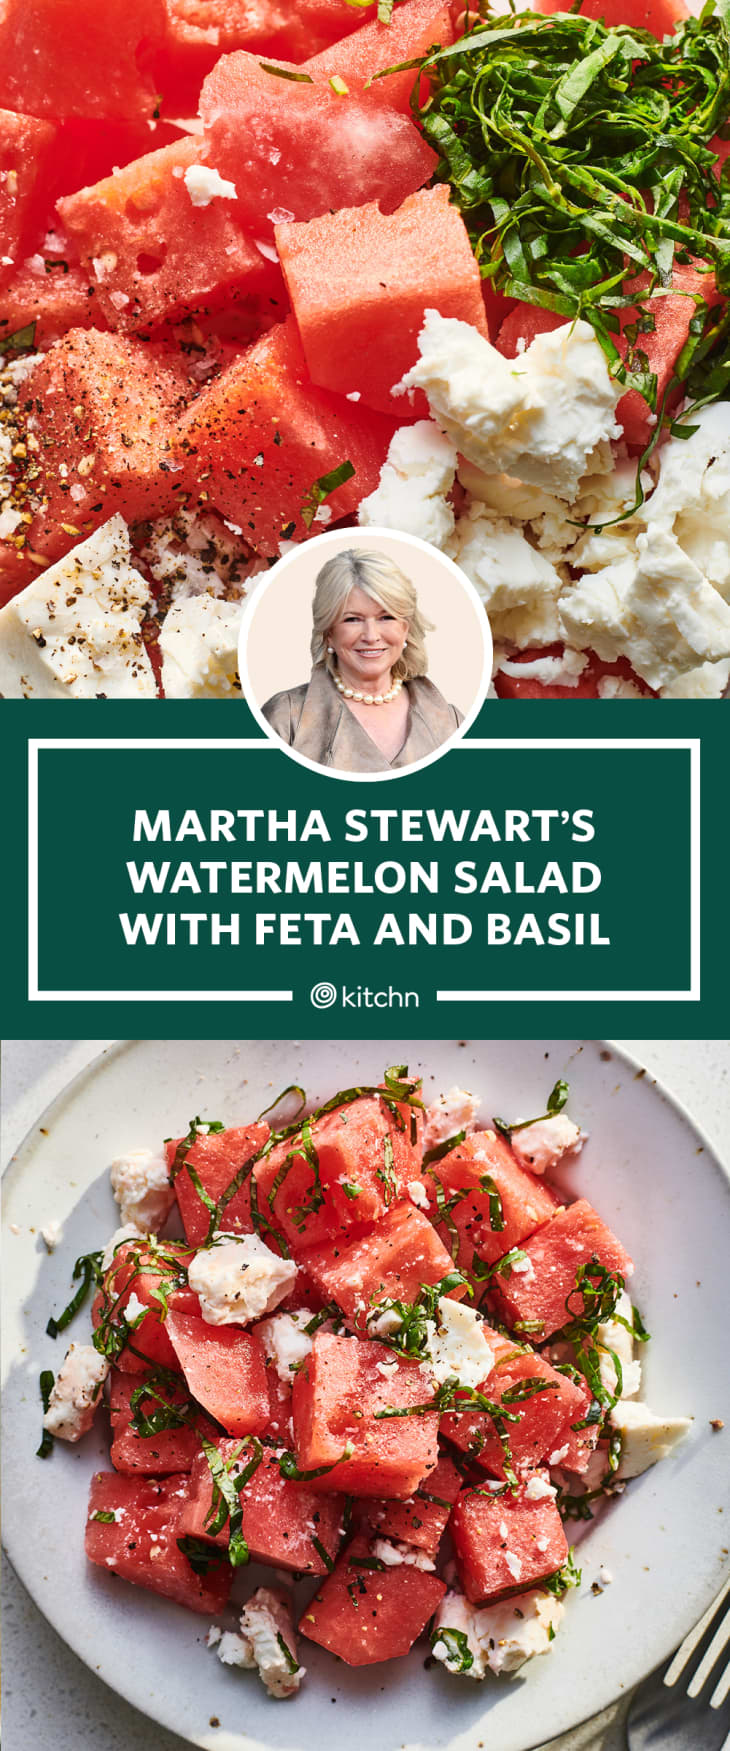 Photos of Martha Stewart and her Watermelon Salad recipe